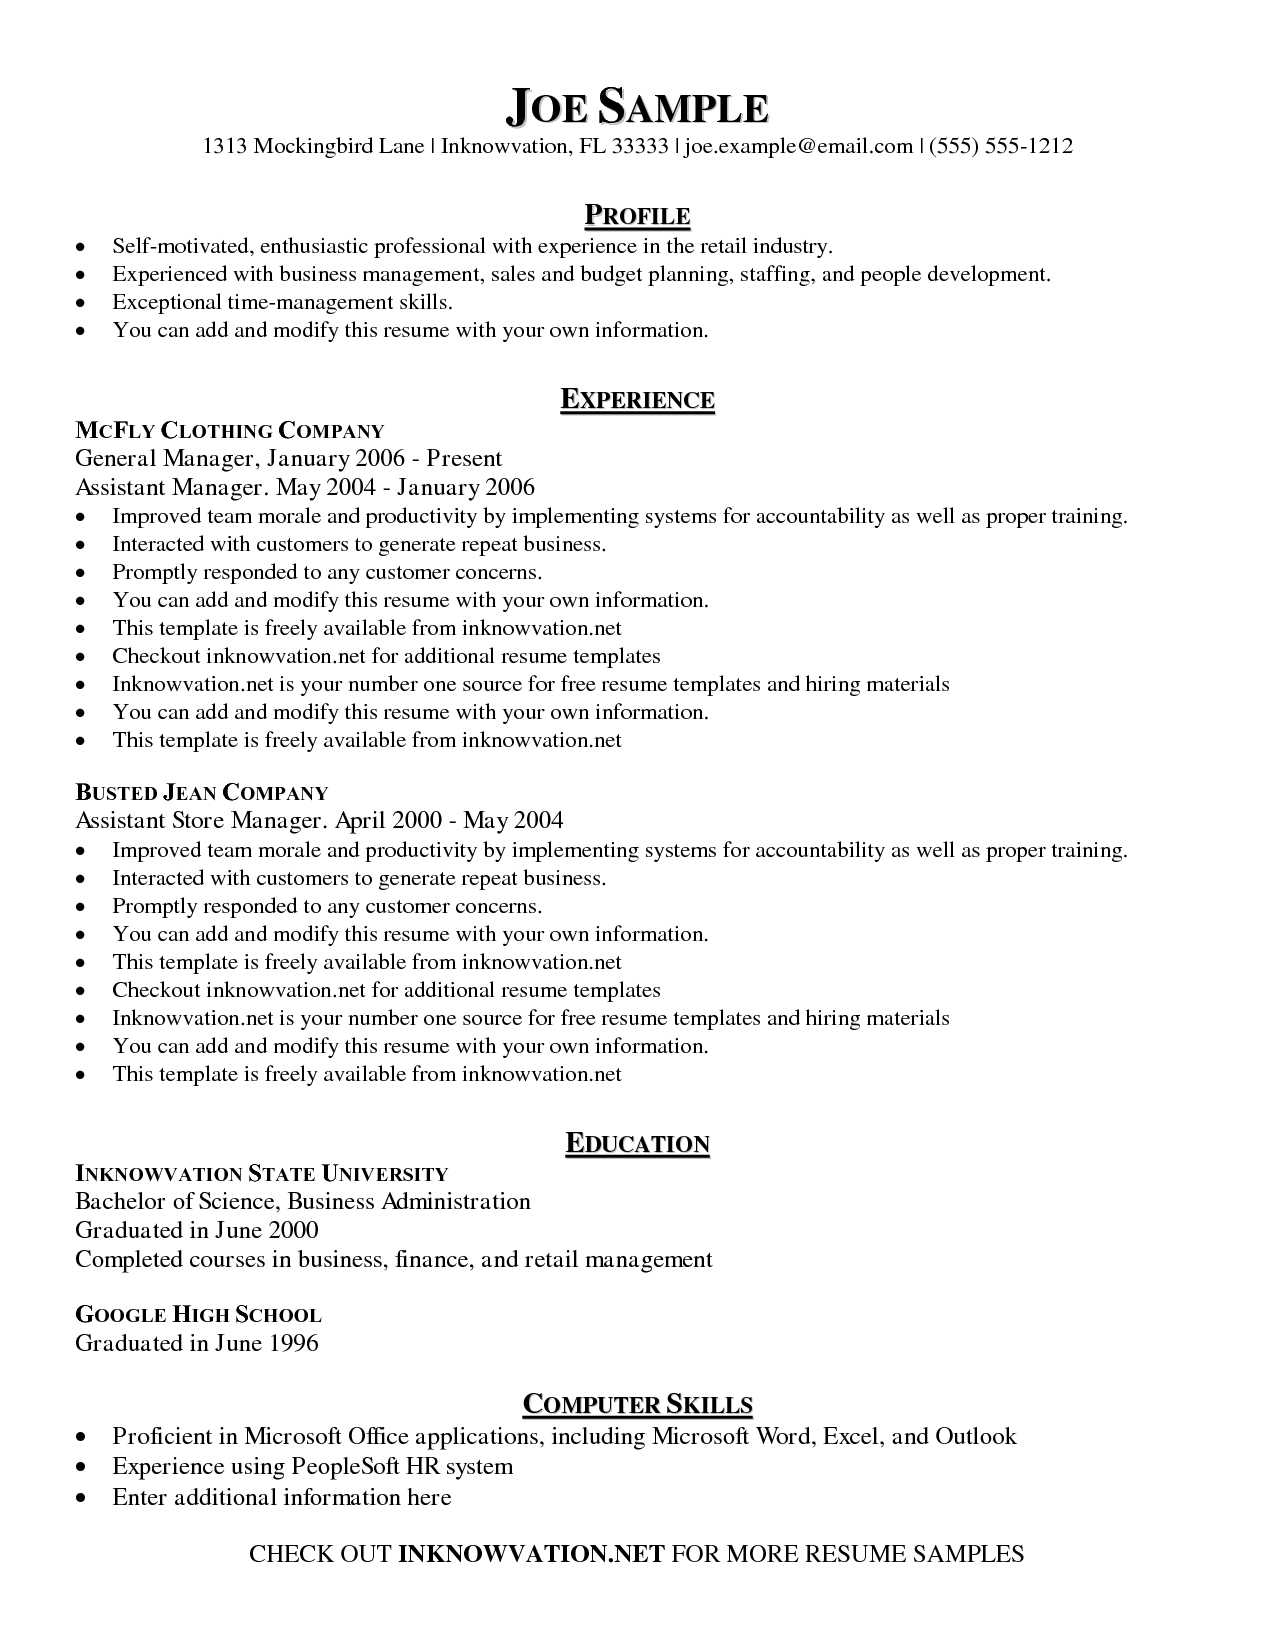 Printable Sample Resume | Room Surf With Free Printable Resume Templates Microsoft Word